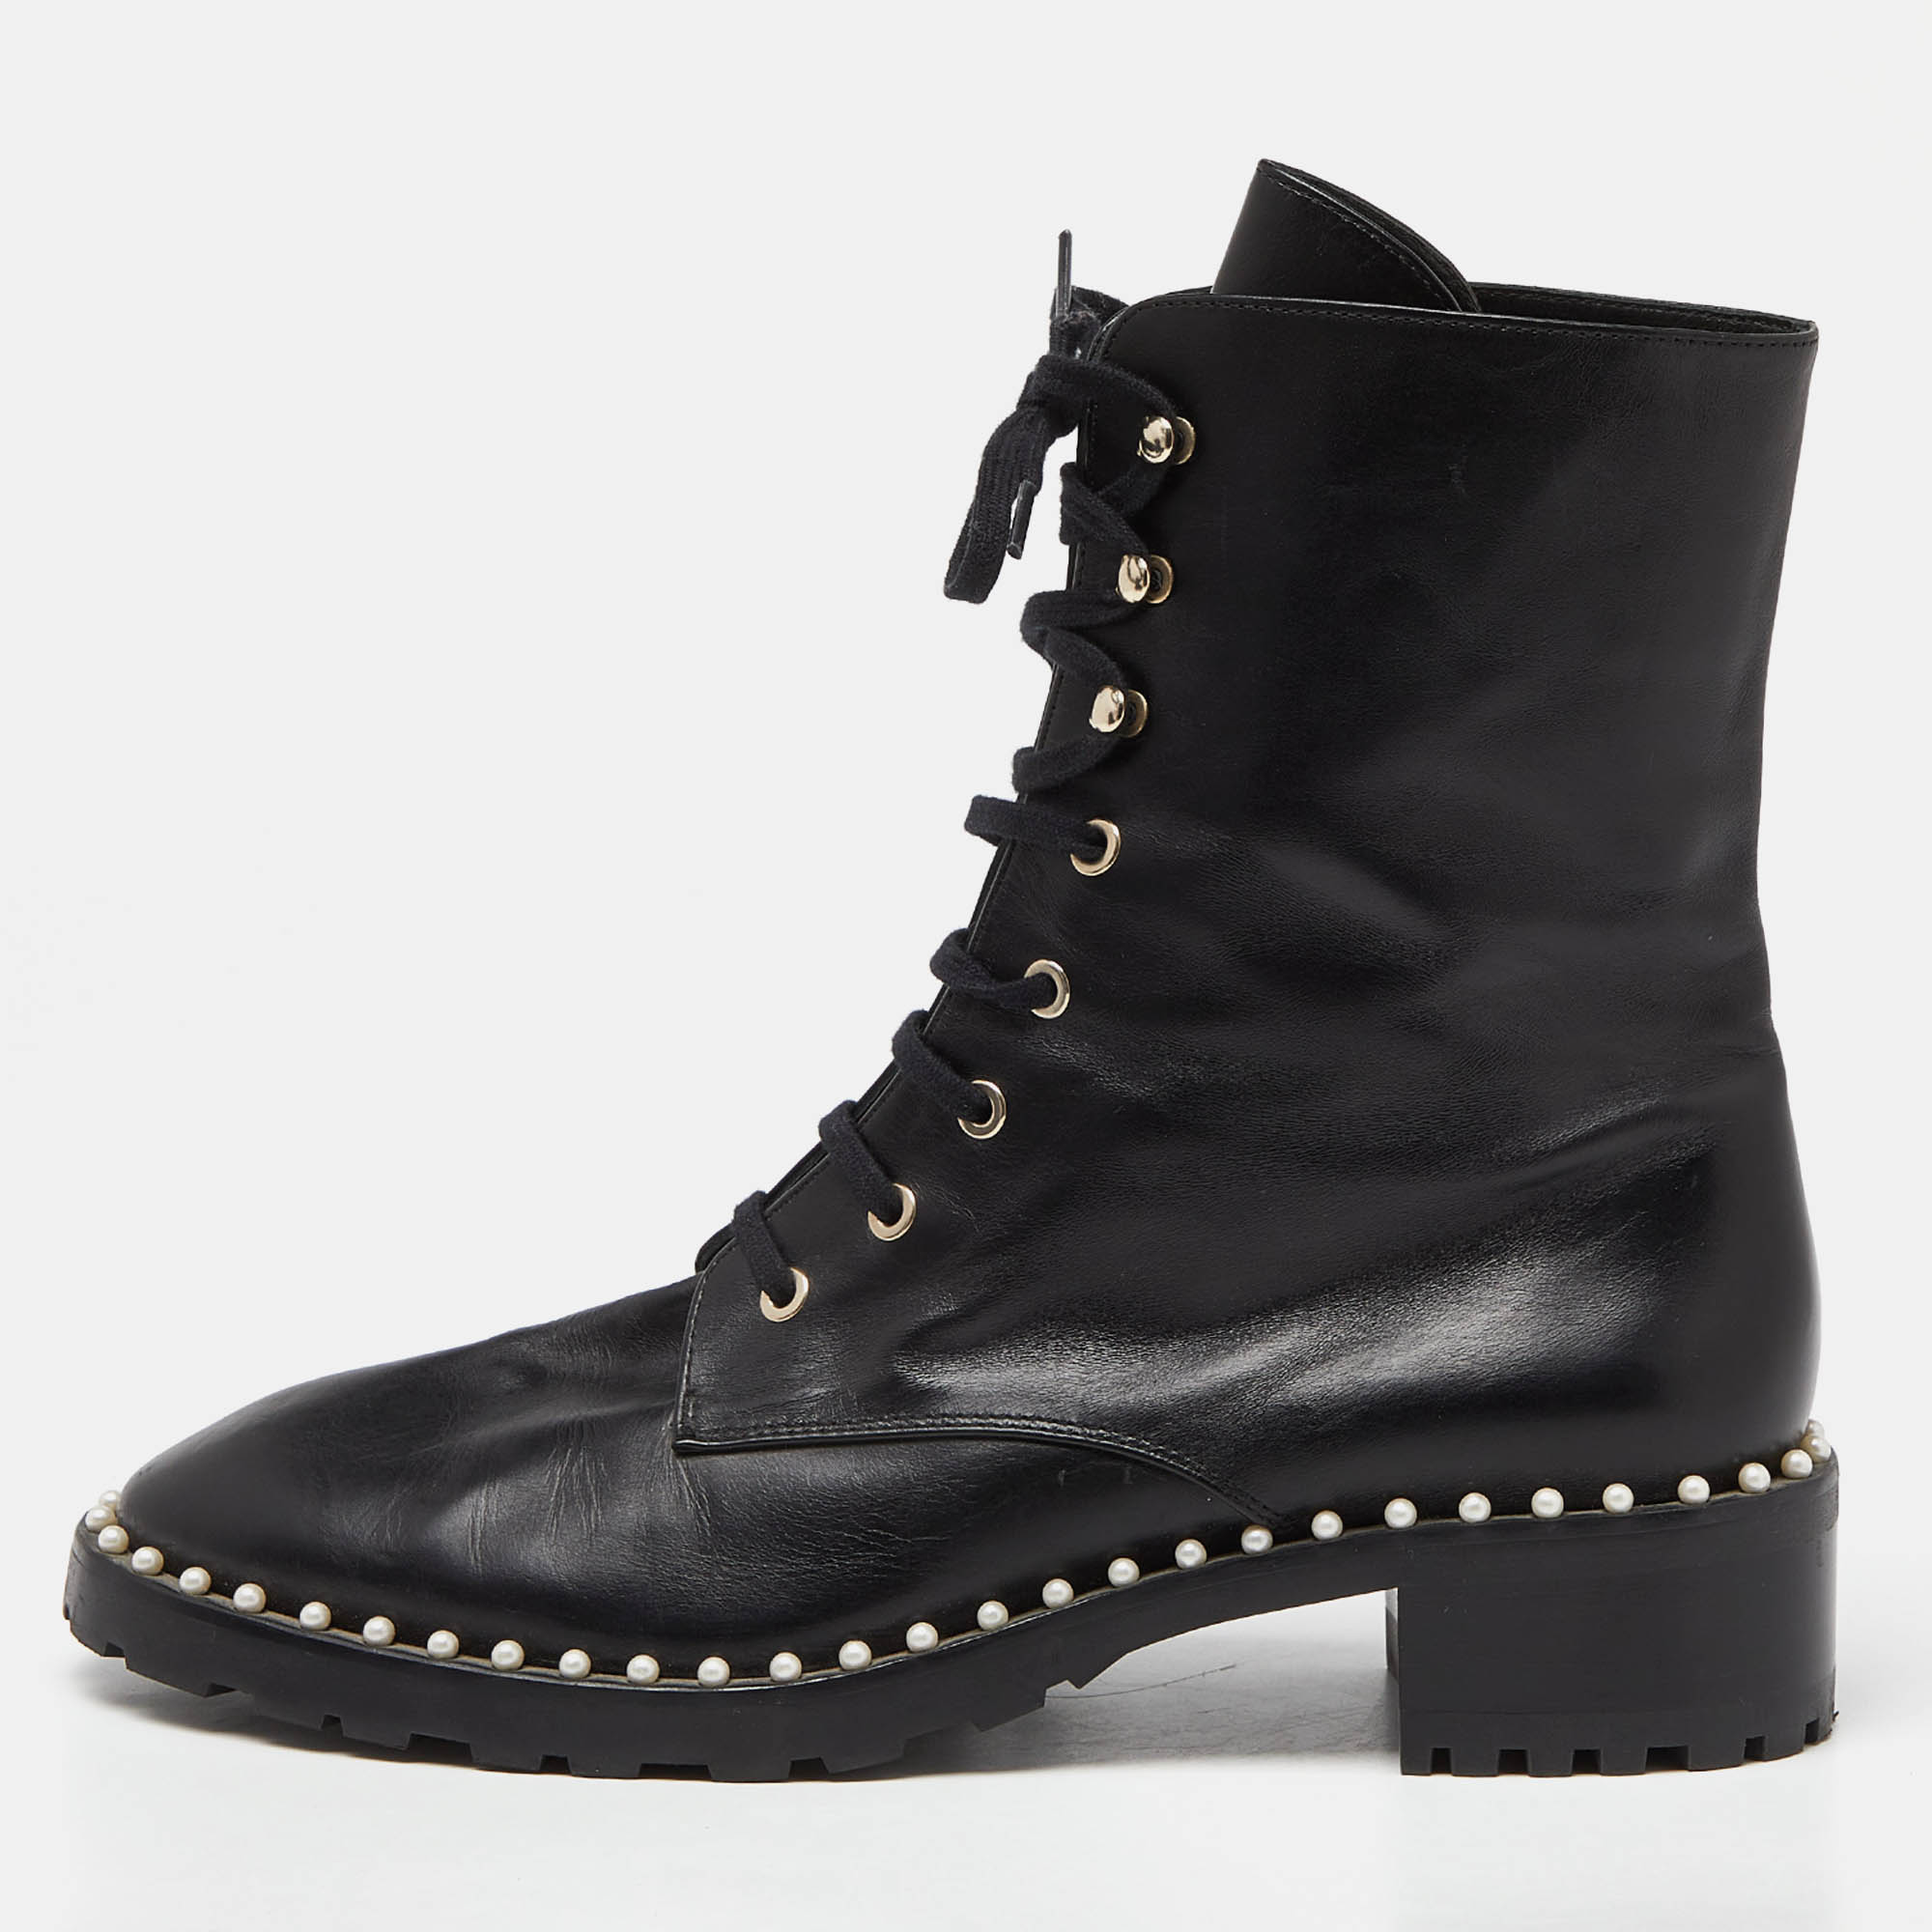 Stuart weitzman black leather sondra pearl embellished ankle boots size 40